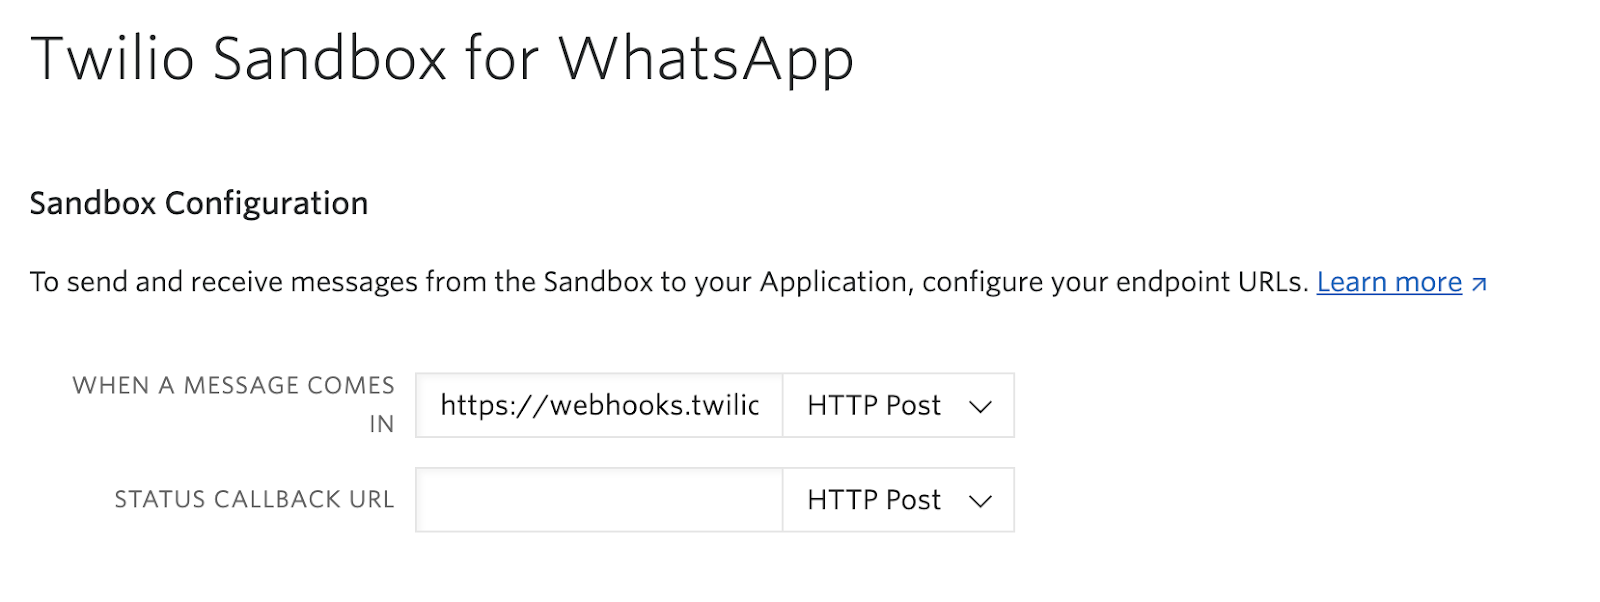 Setting a webhook for our WhatsApp sandbox